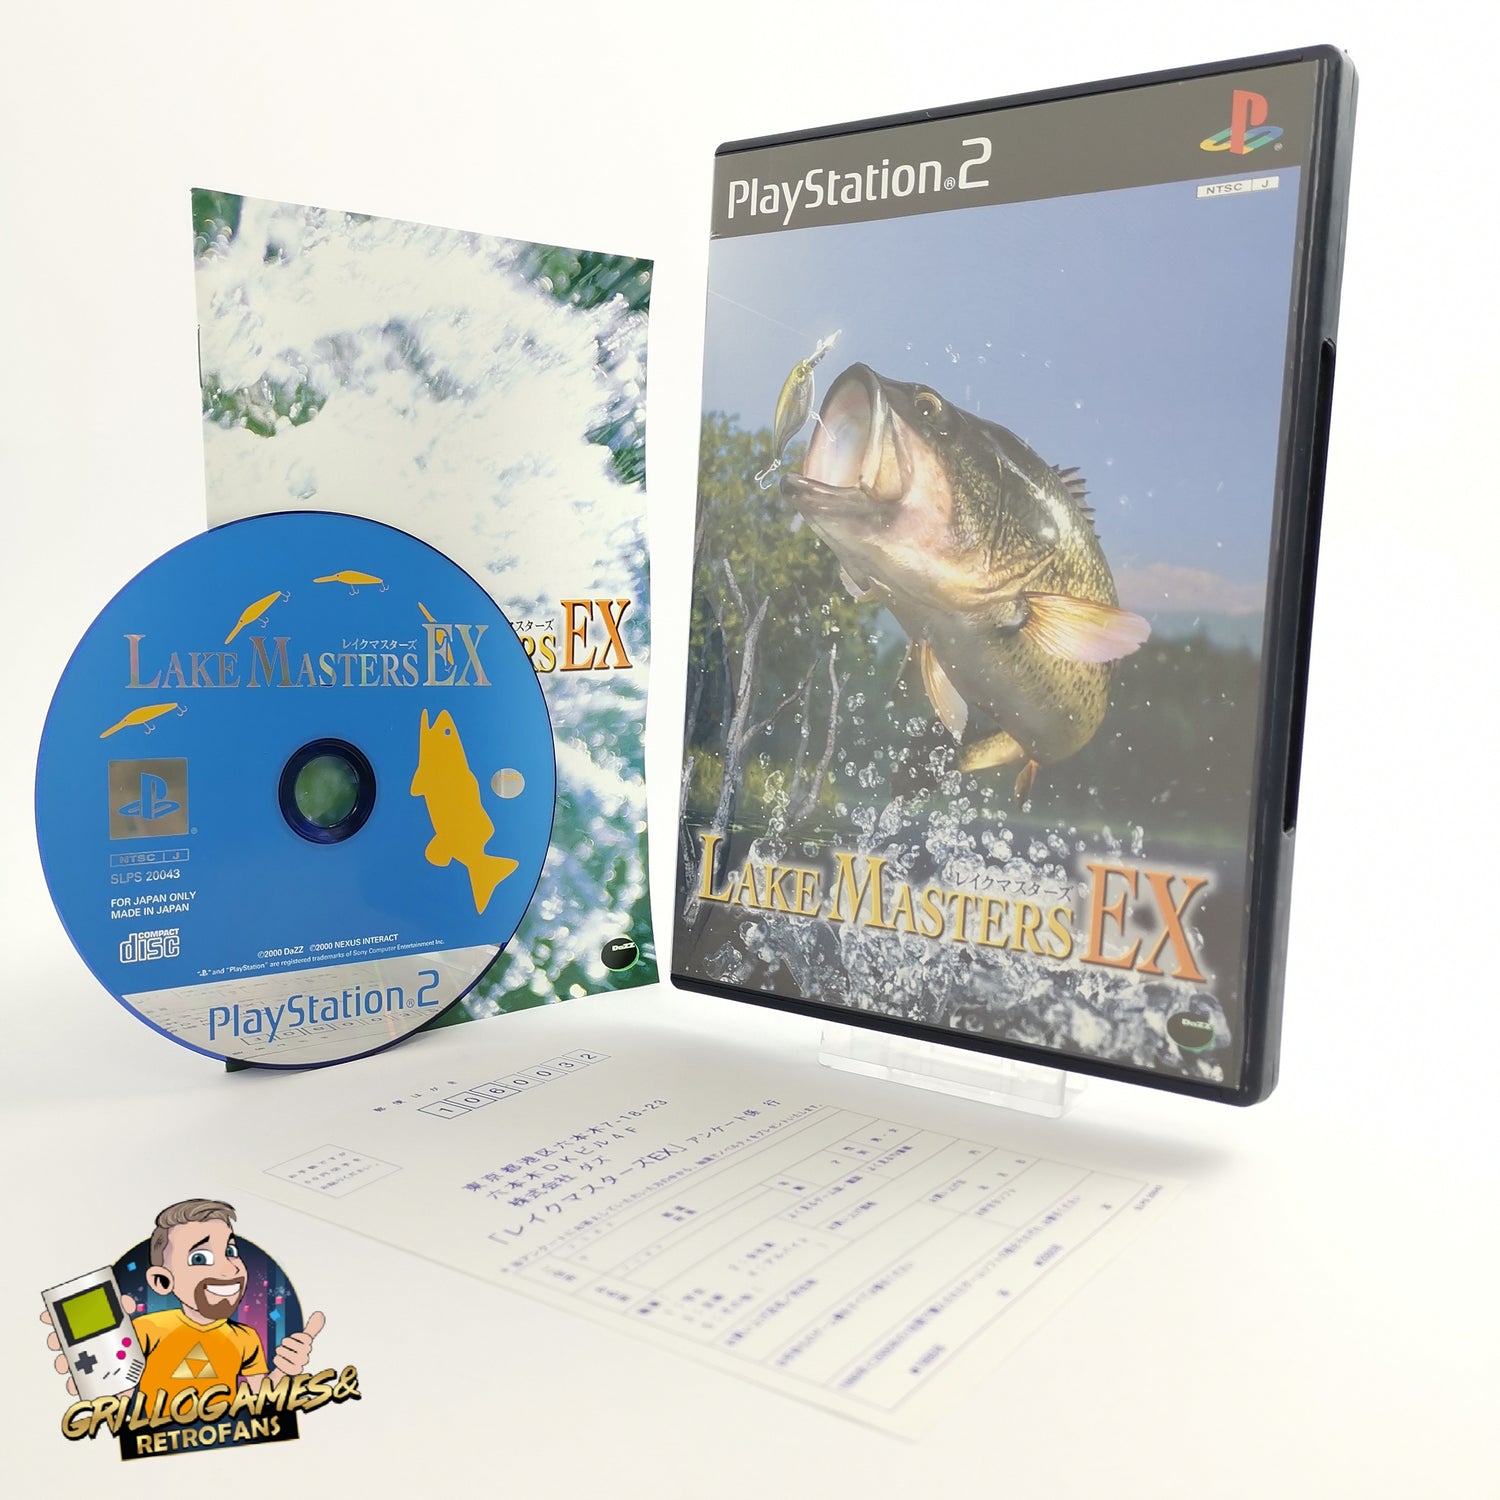 Sony Playstation 2 Game: Lake Masters EX | PS2 - OVP NTSC-J JAPAN version